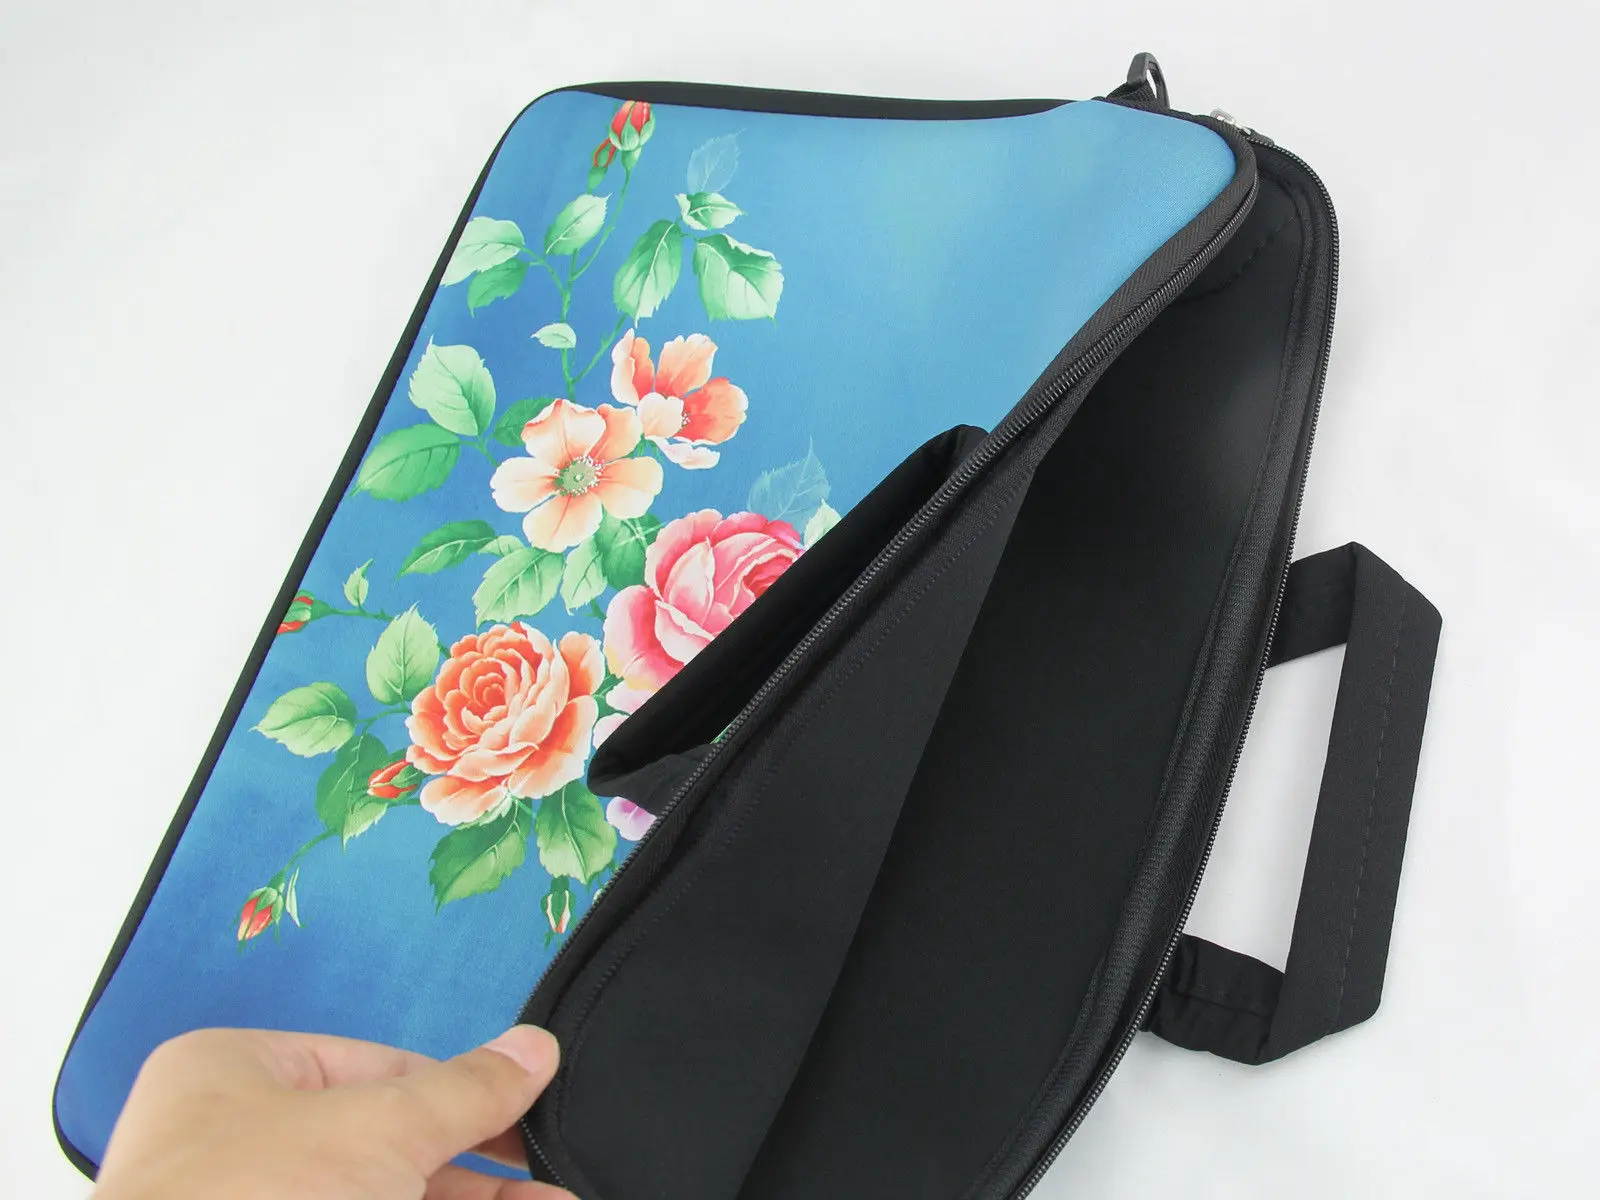 black gun laptop sleeve case 13 3 14 15 6 waterproof notebook briefcase shoulder bag for macbook pro acer xiaomi lenovo ho asus free global shipping